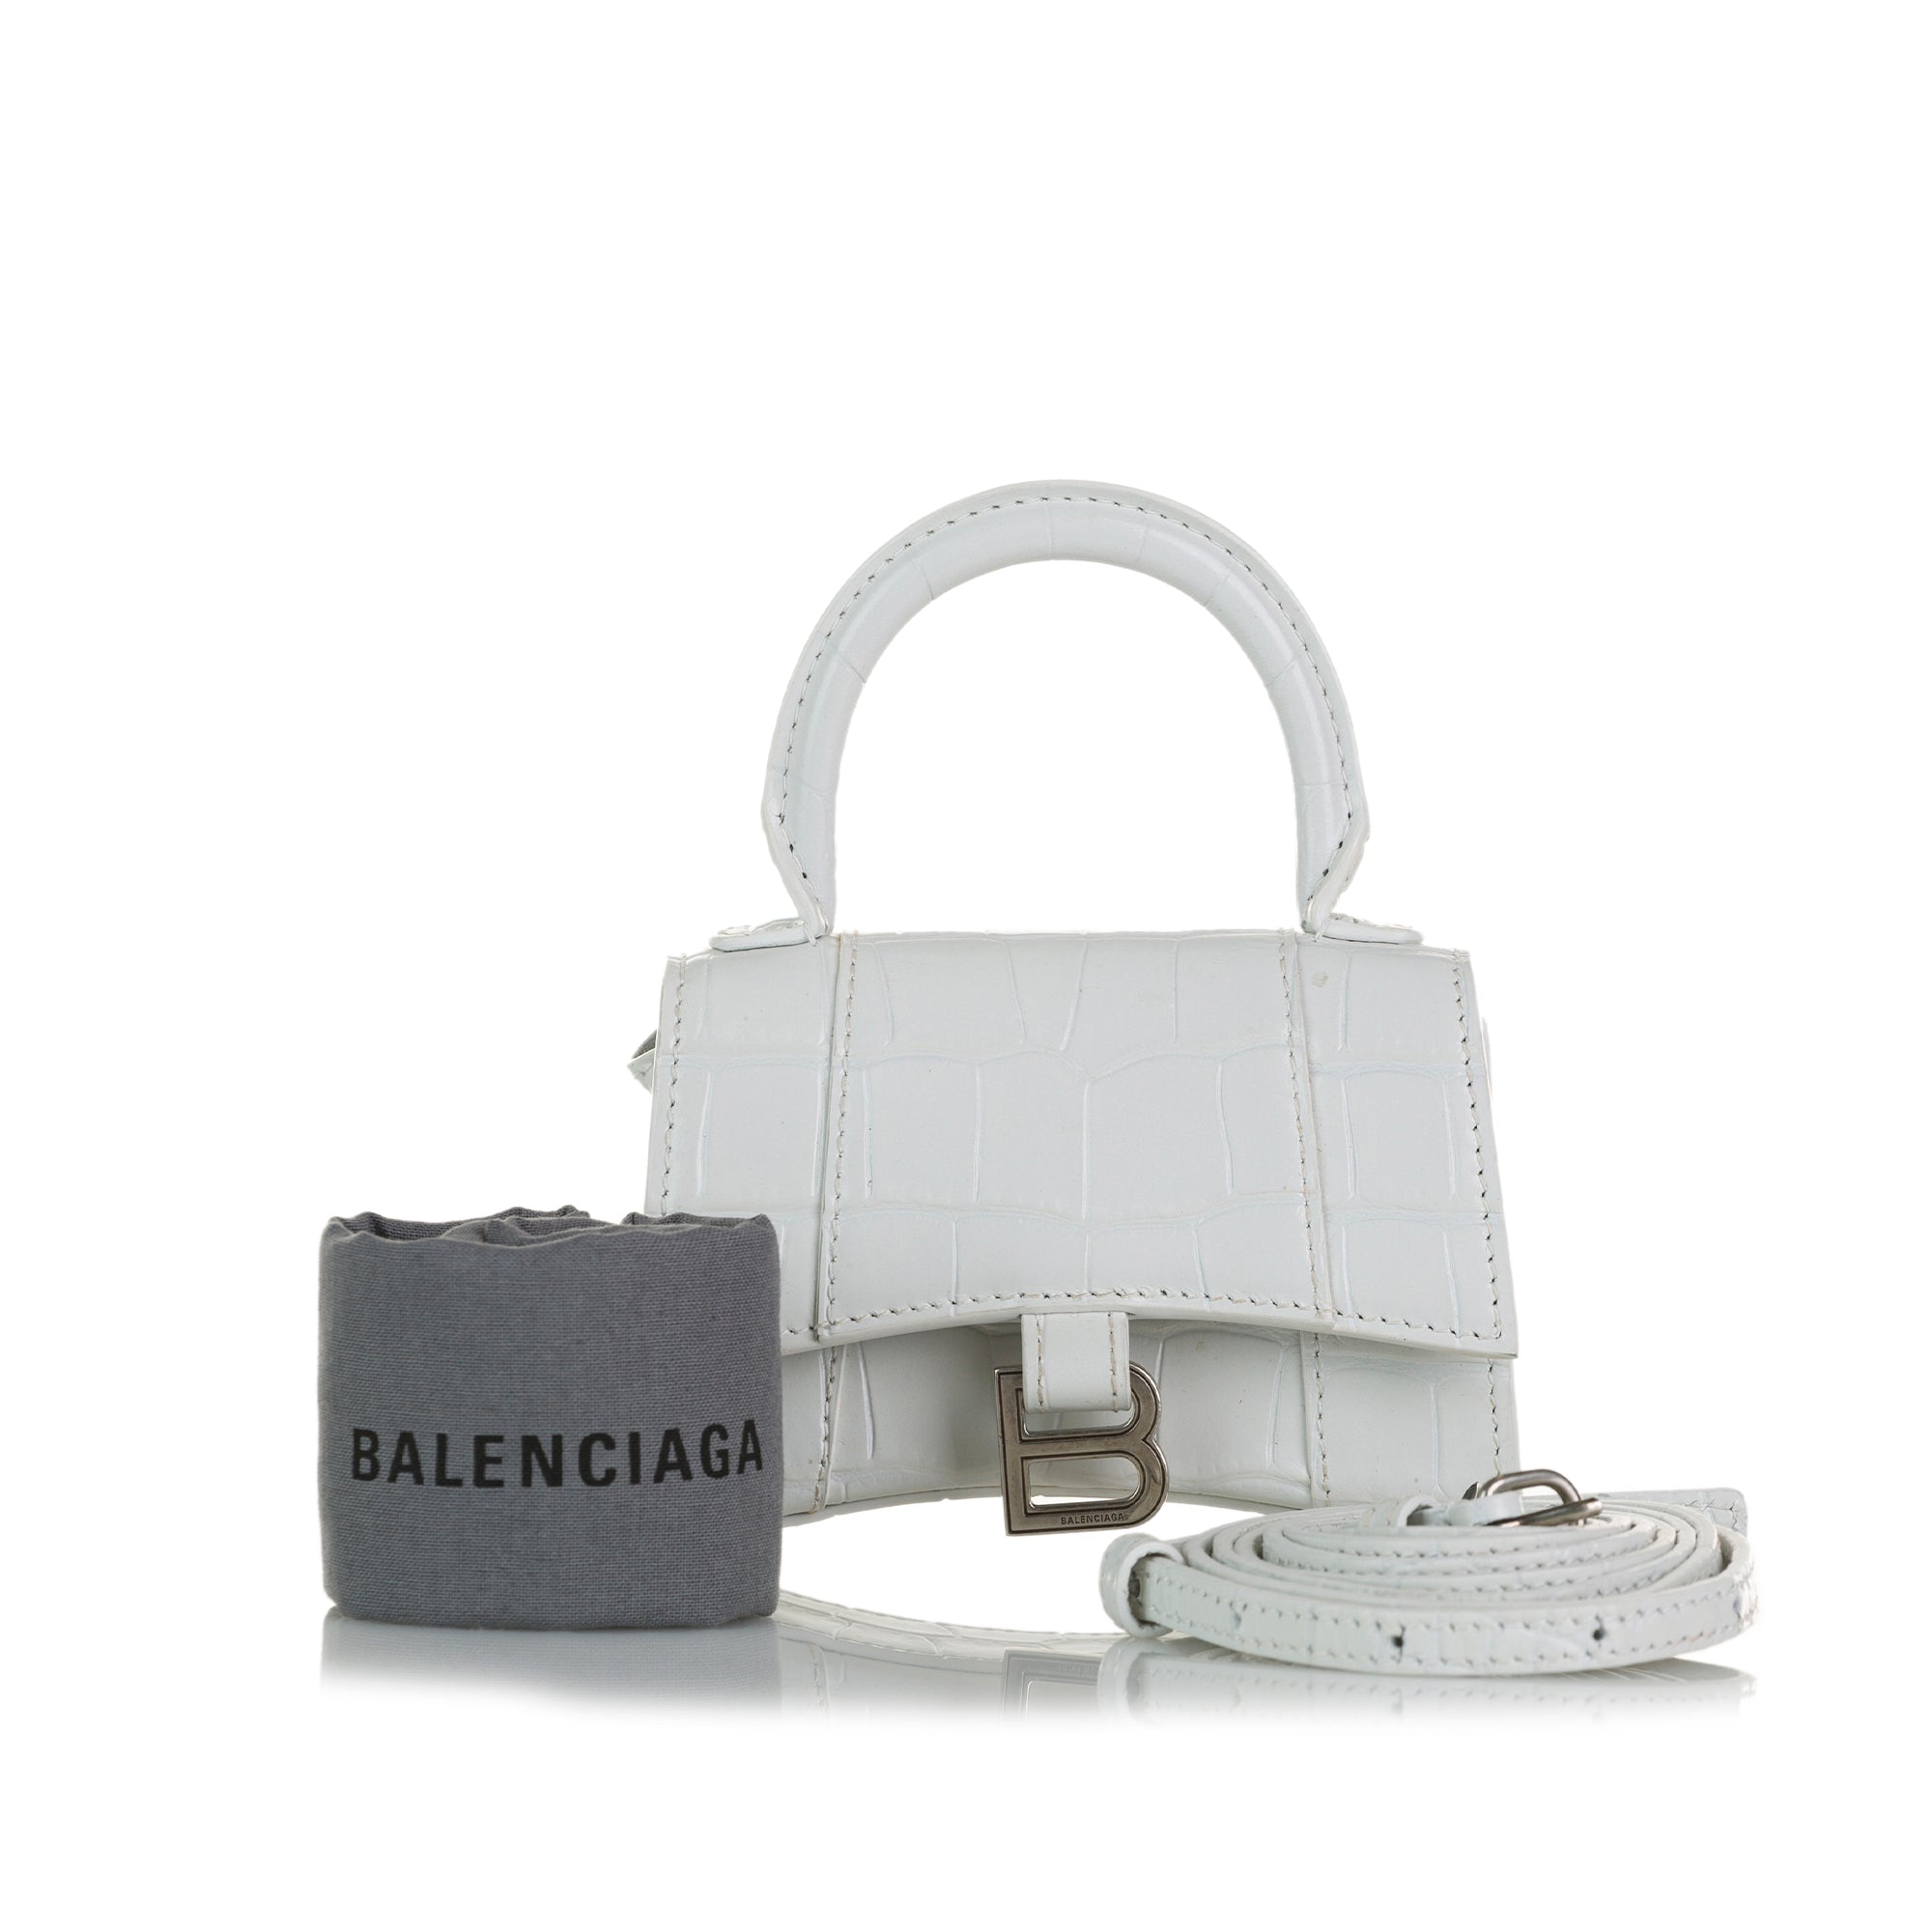 Balenciaga hourglass mini